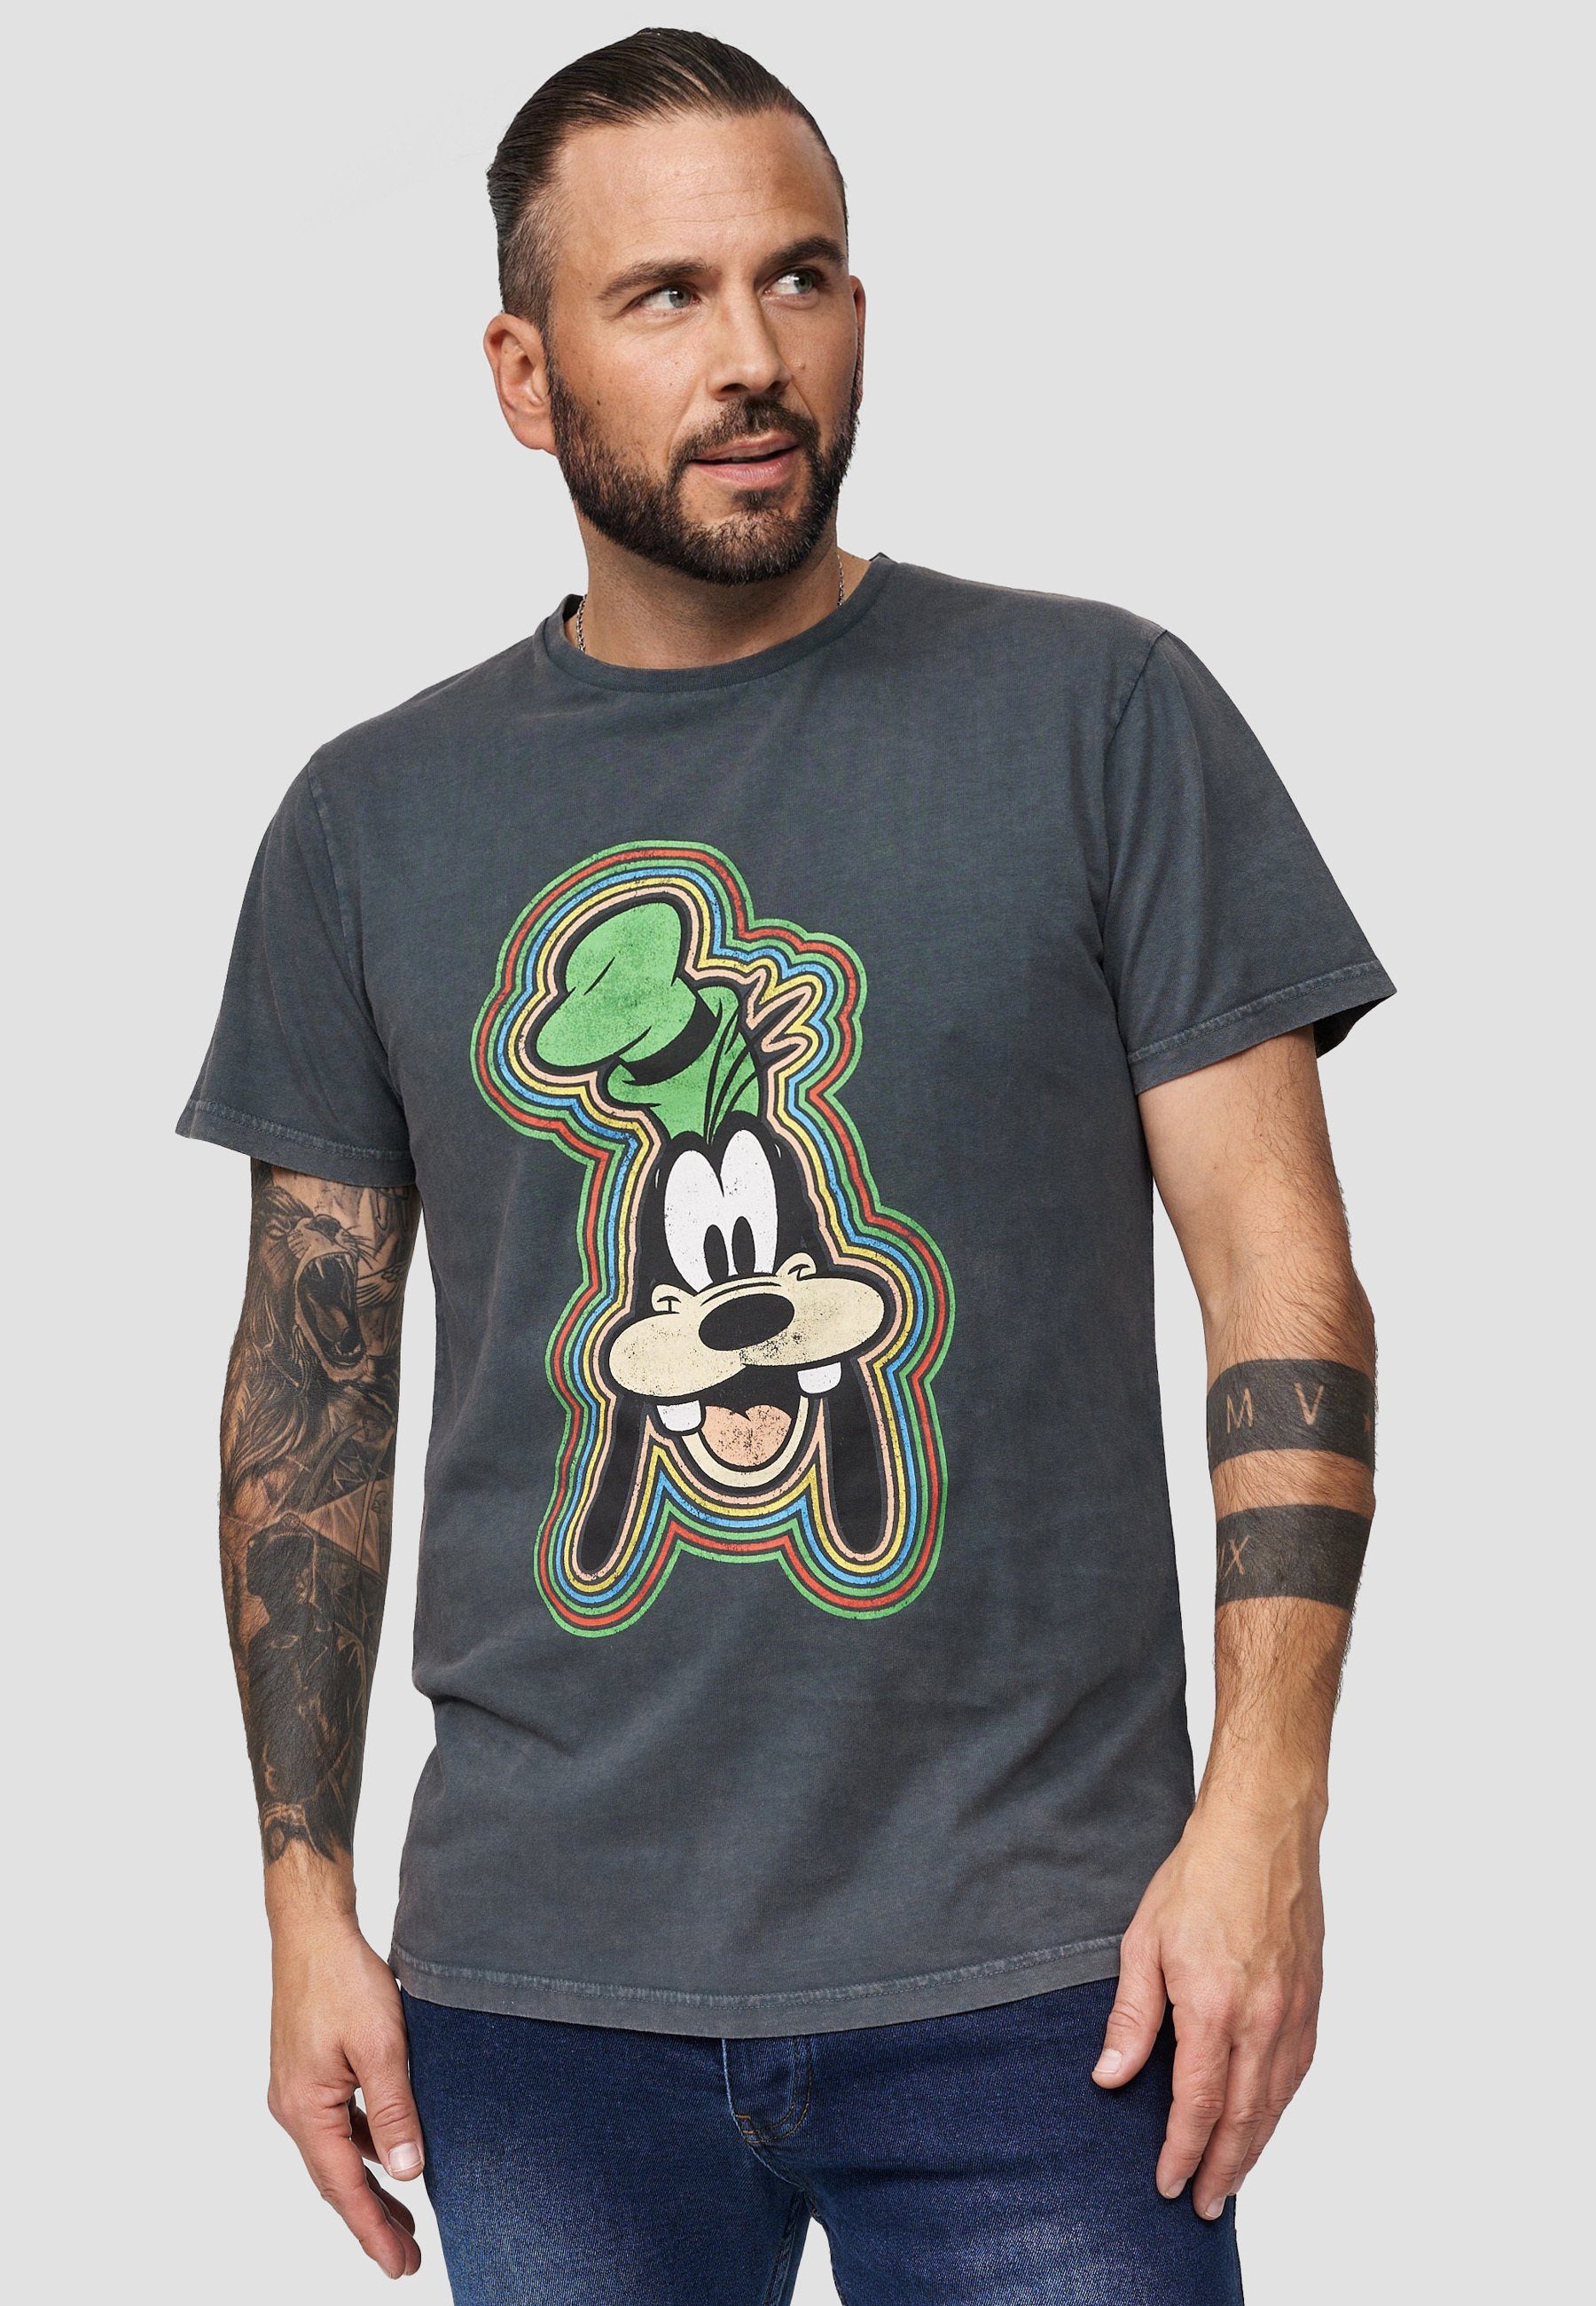 Goofy Recovered Bio-Baumwolle GOTS Outline zertifizierte T-Shirt Kohlegrau Disney